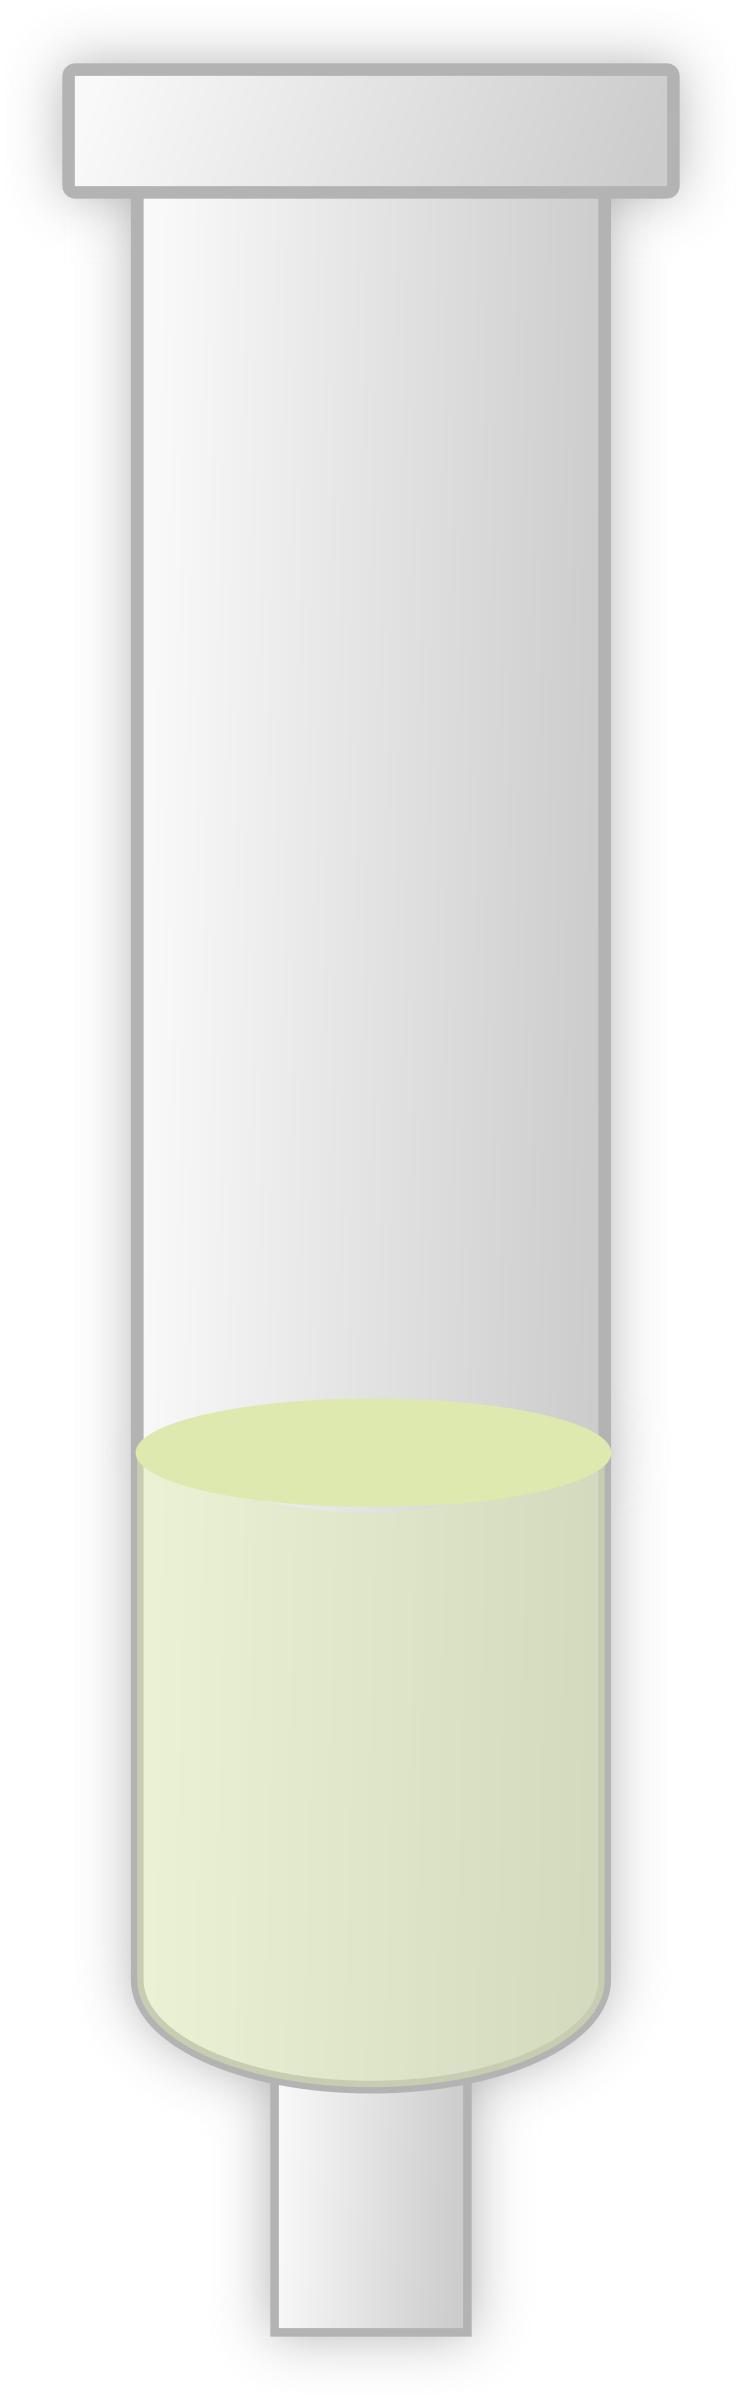 chromatography column png transparent